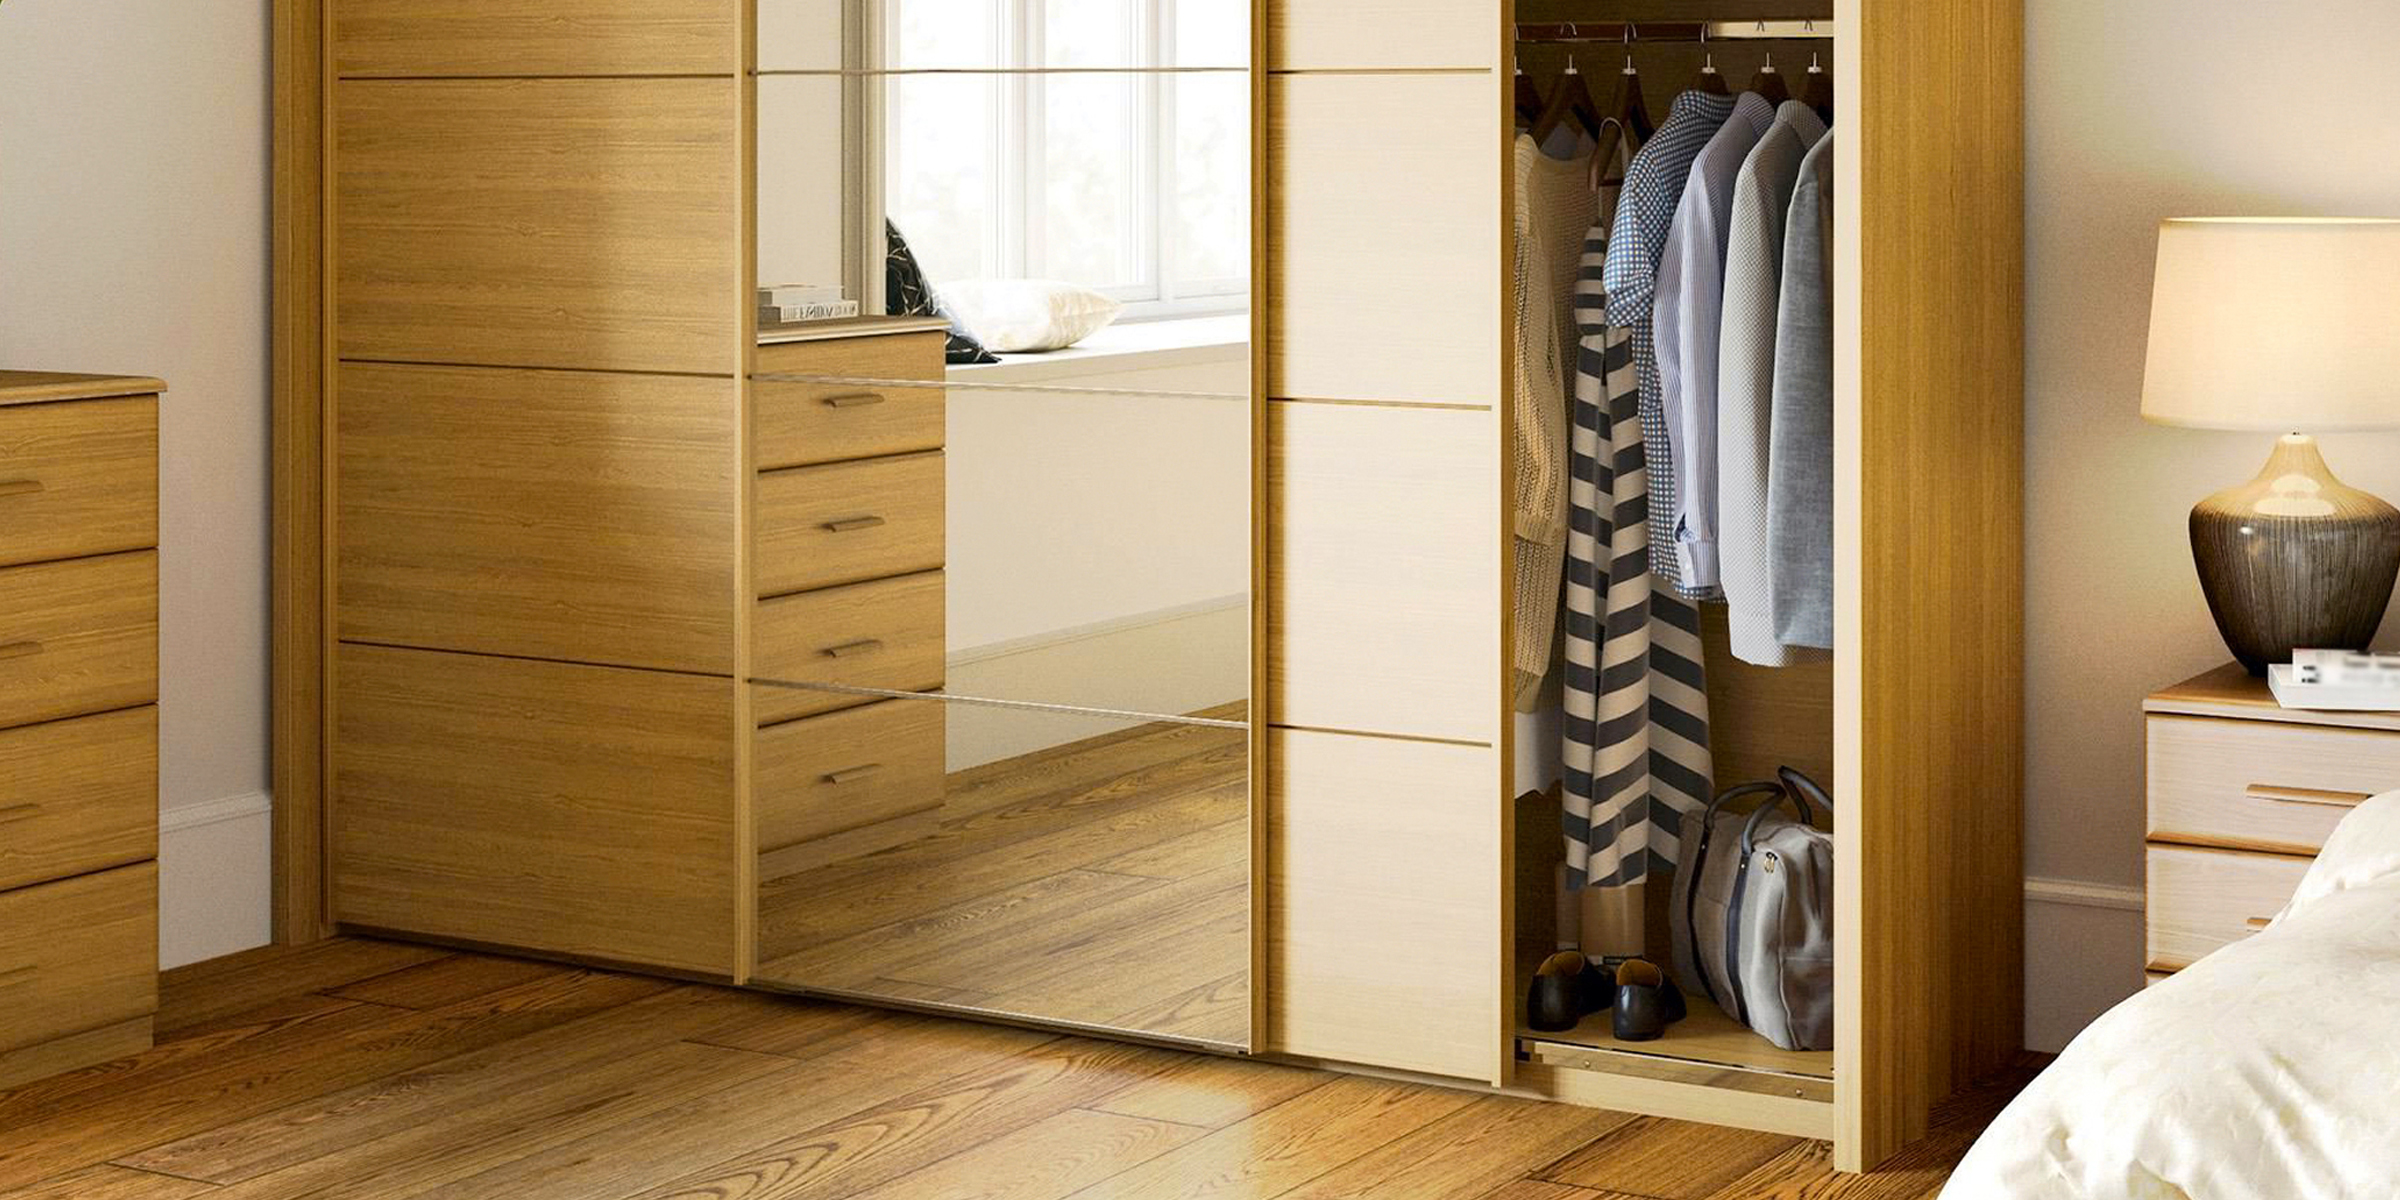 A bedroom closet | Source: Shutterstock